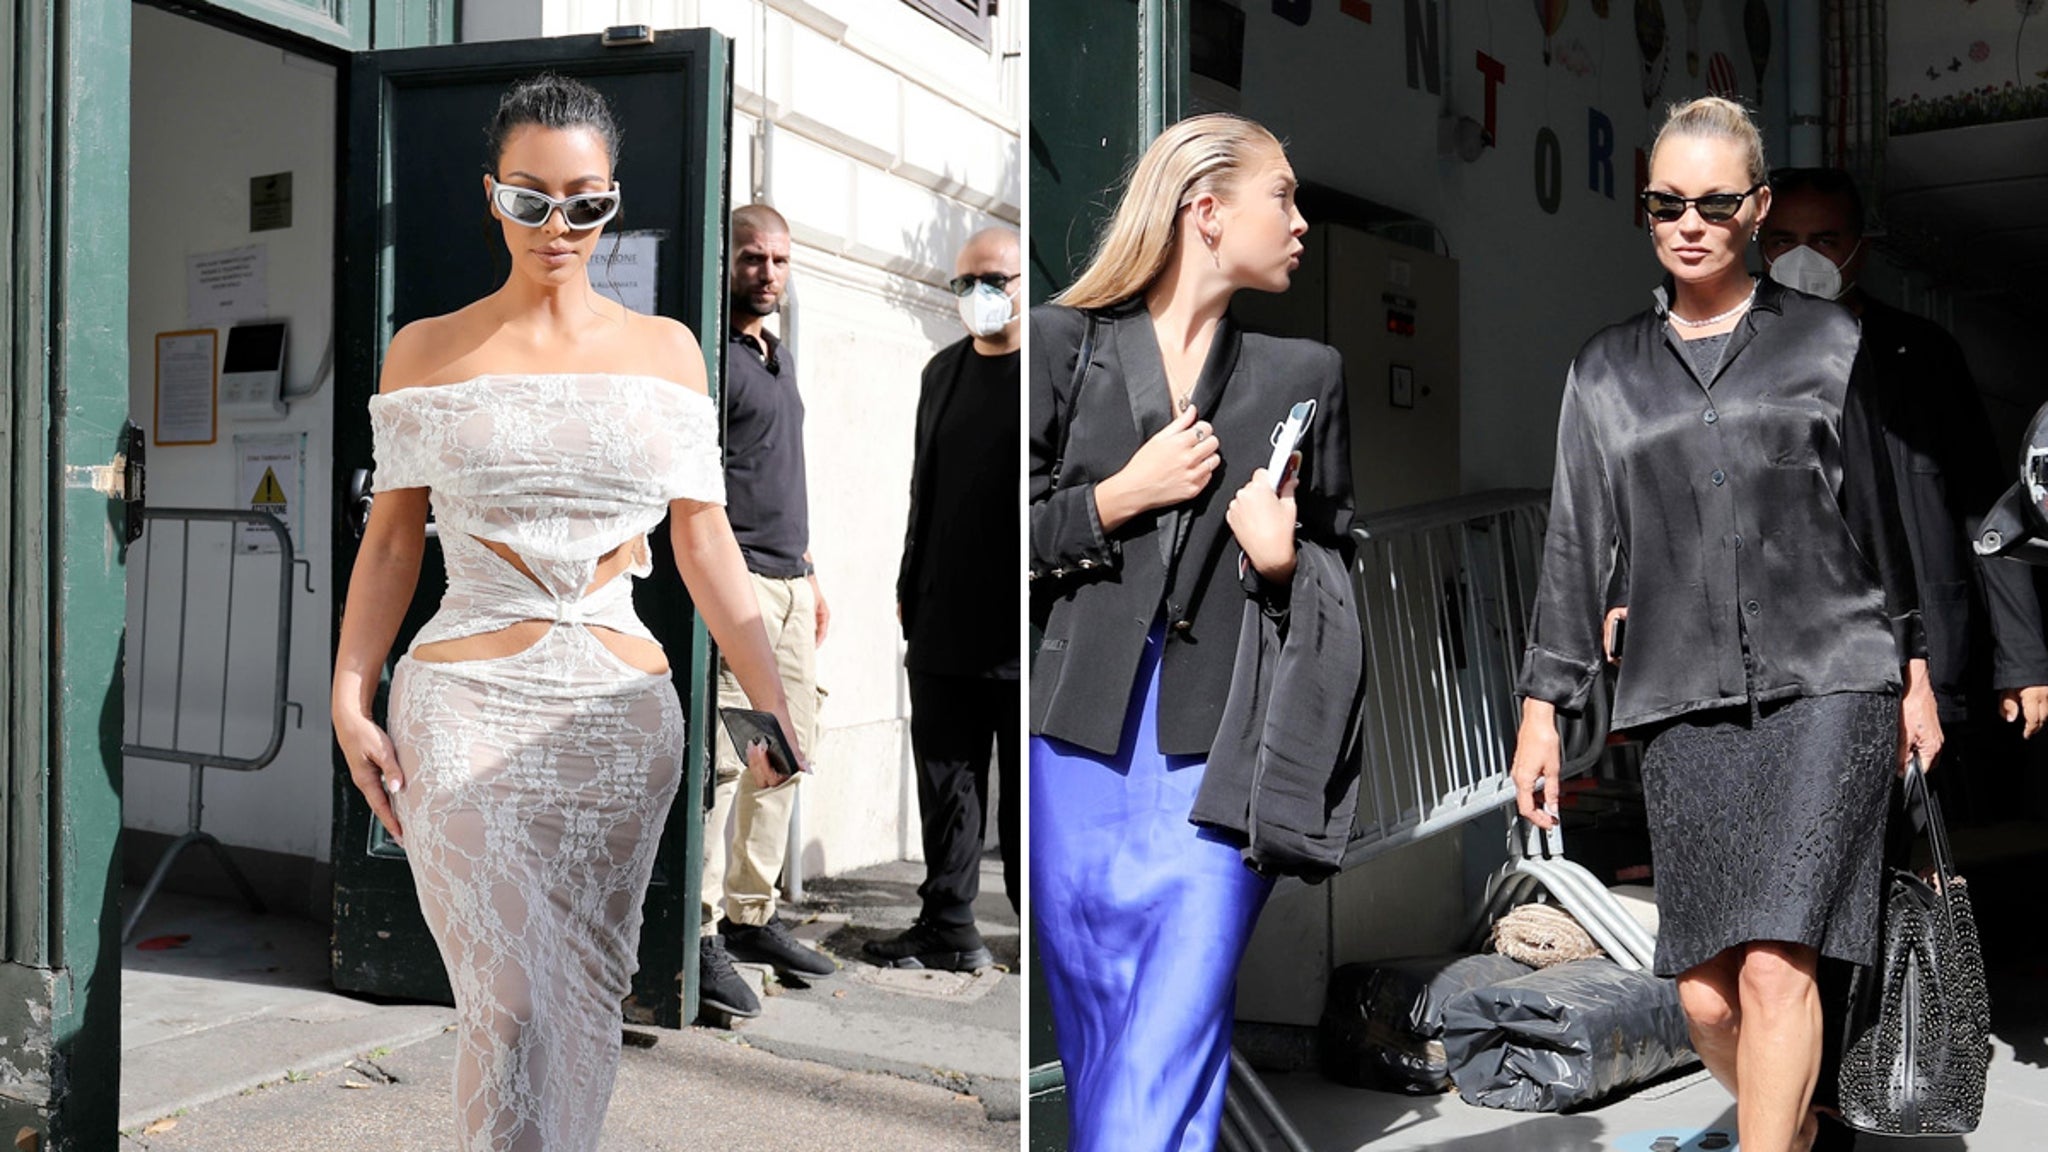 Kim Kardashian Visits the Vatican with Kate Moss